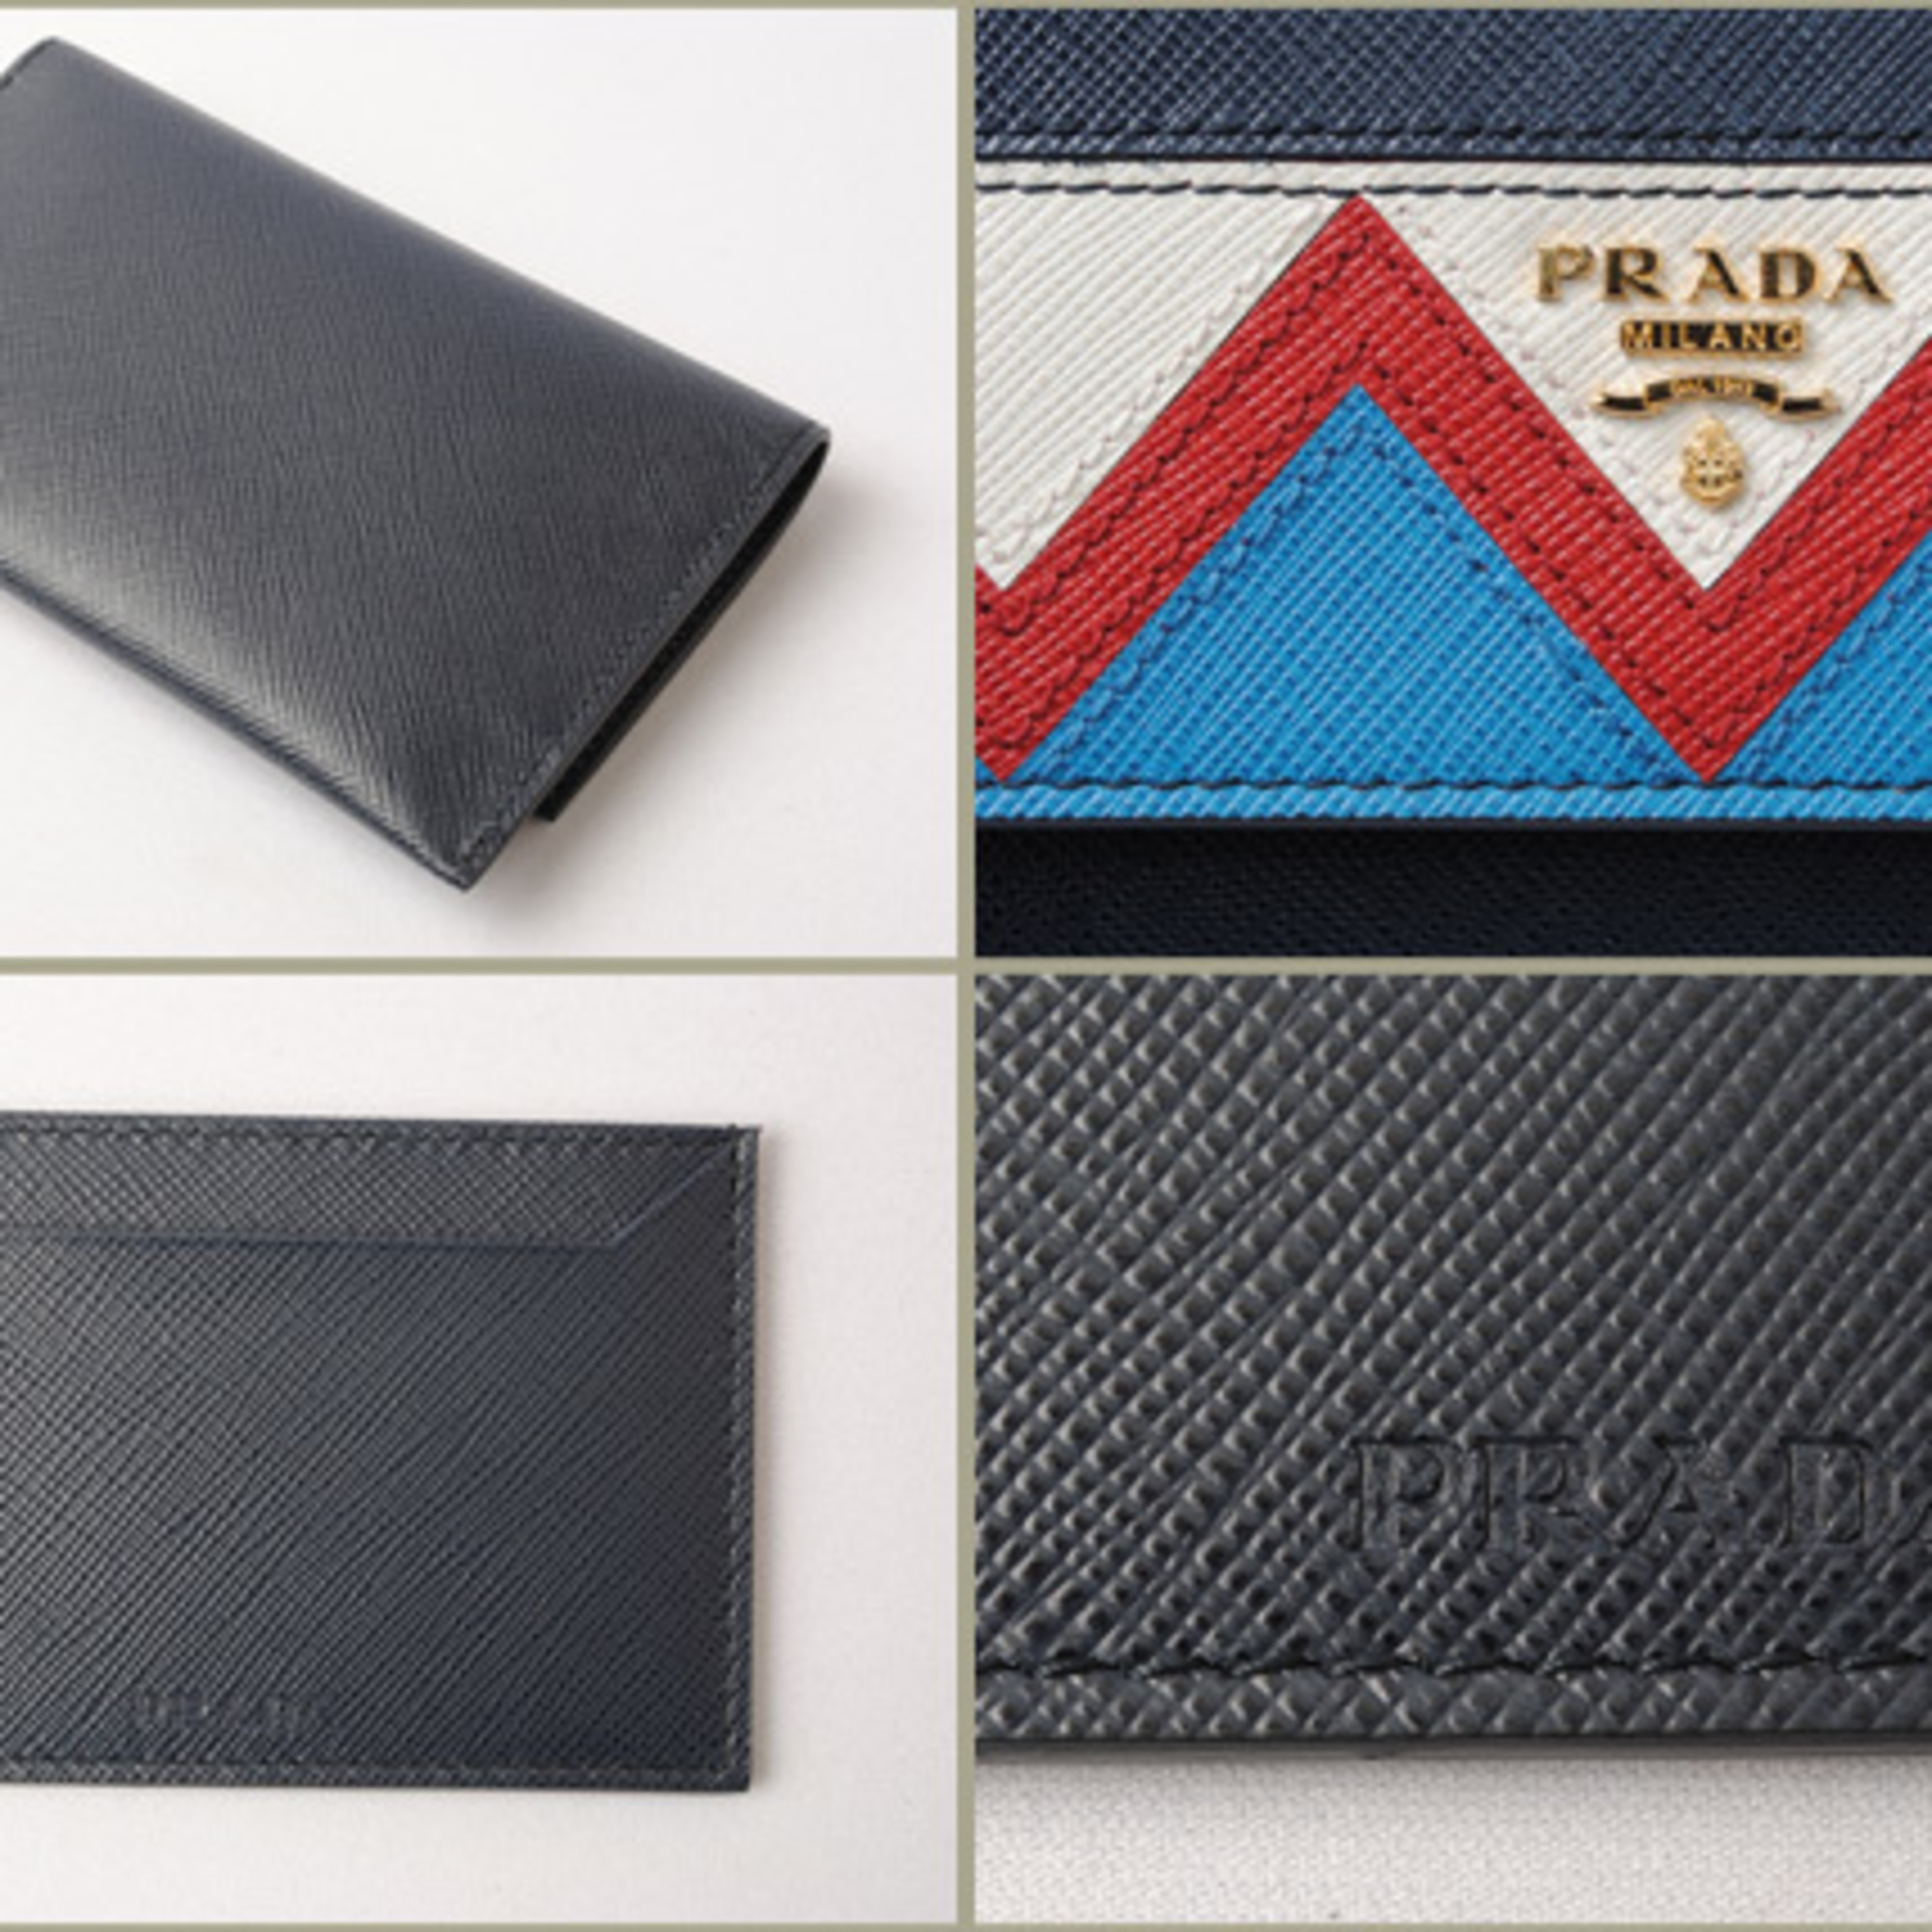 Prada card case folded wallet PRADA 1MC004 SAFFIANO GRECHE embossed leather BALTICO ROSSO navy red